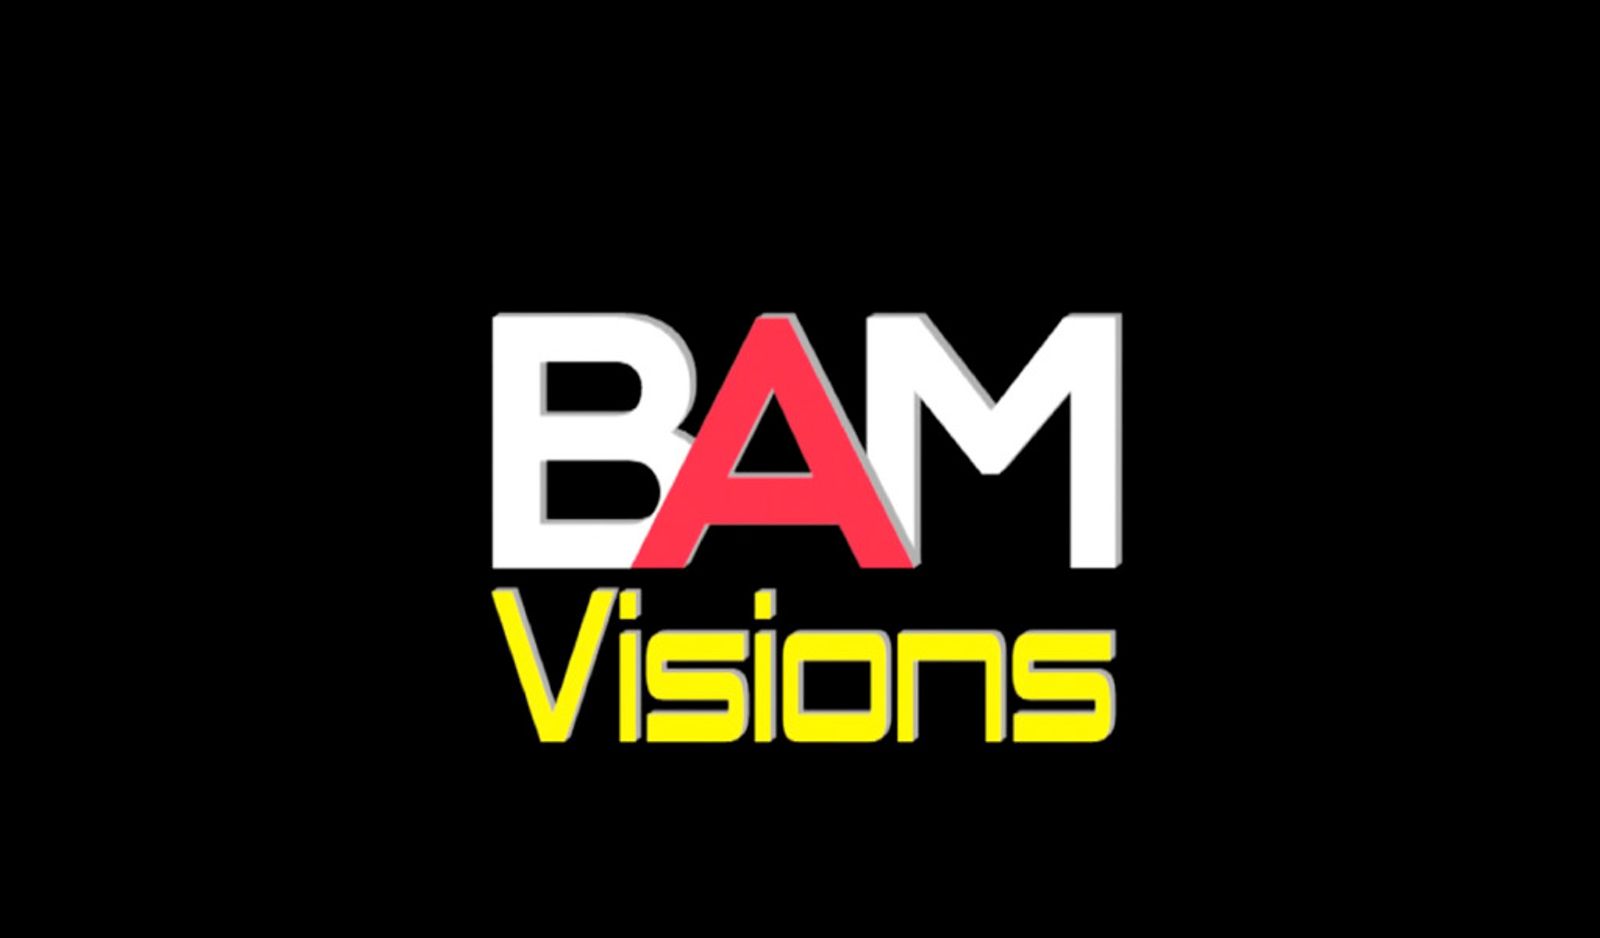 BAMVisions.com Revamped for 2018